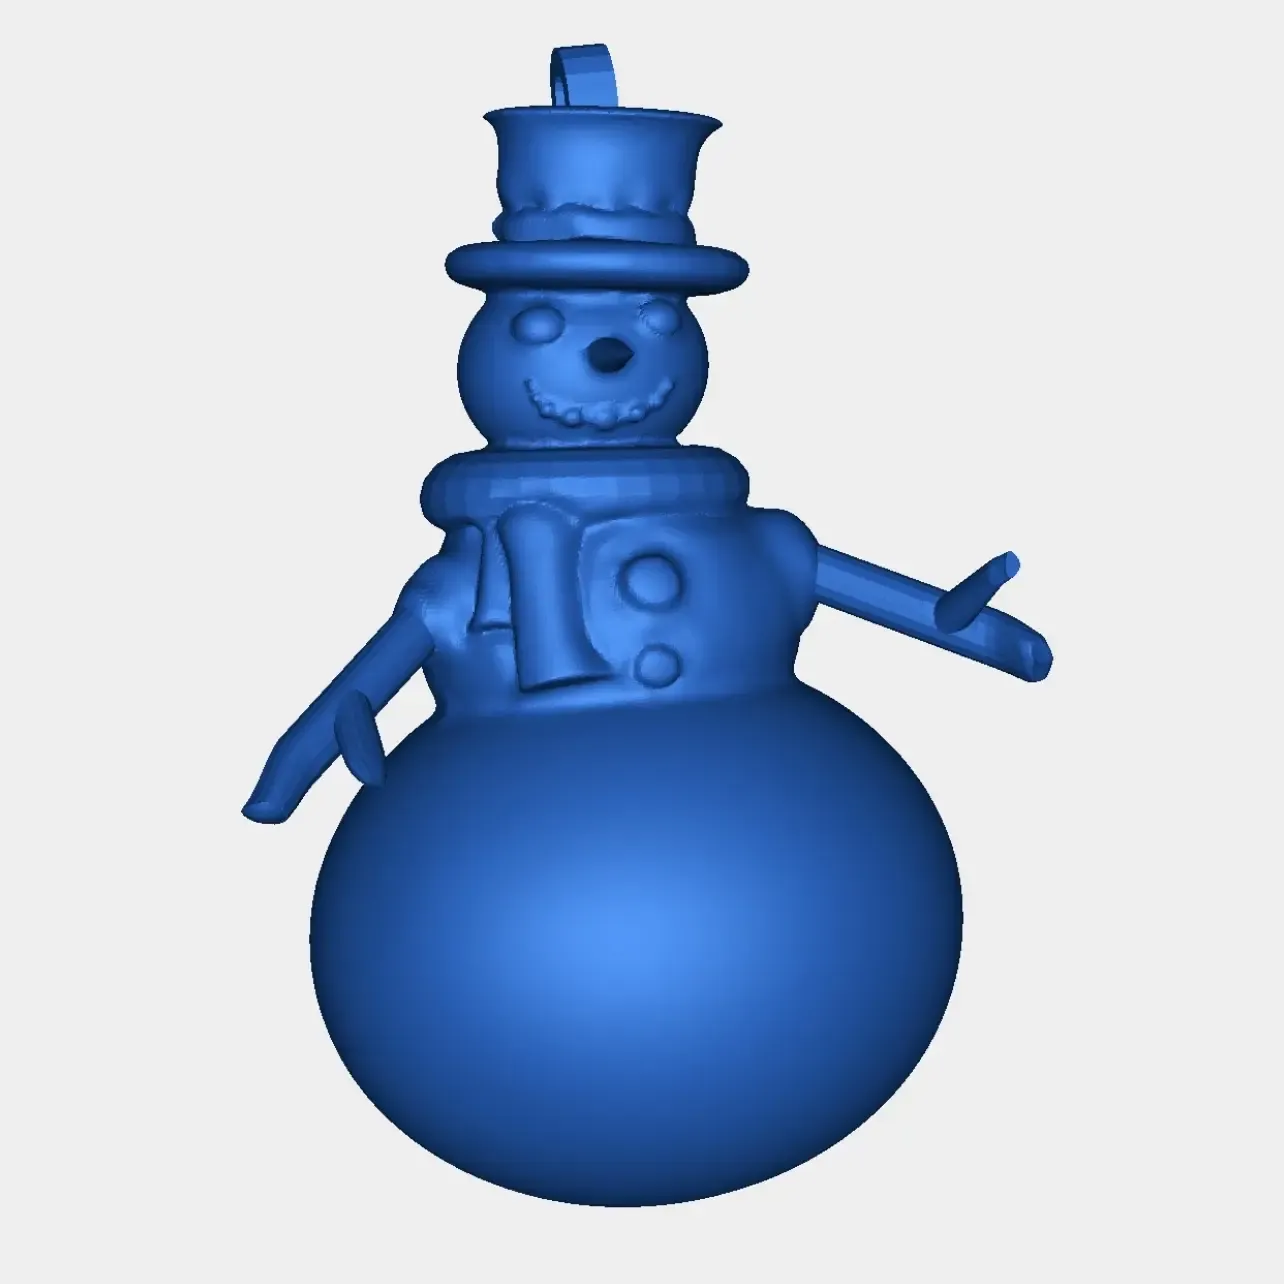 Snowman update